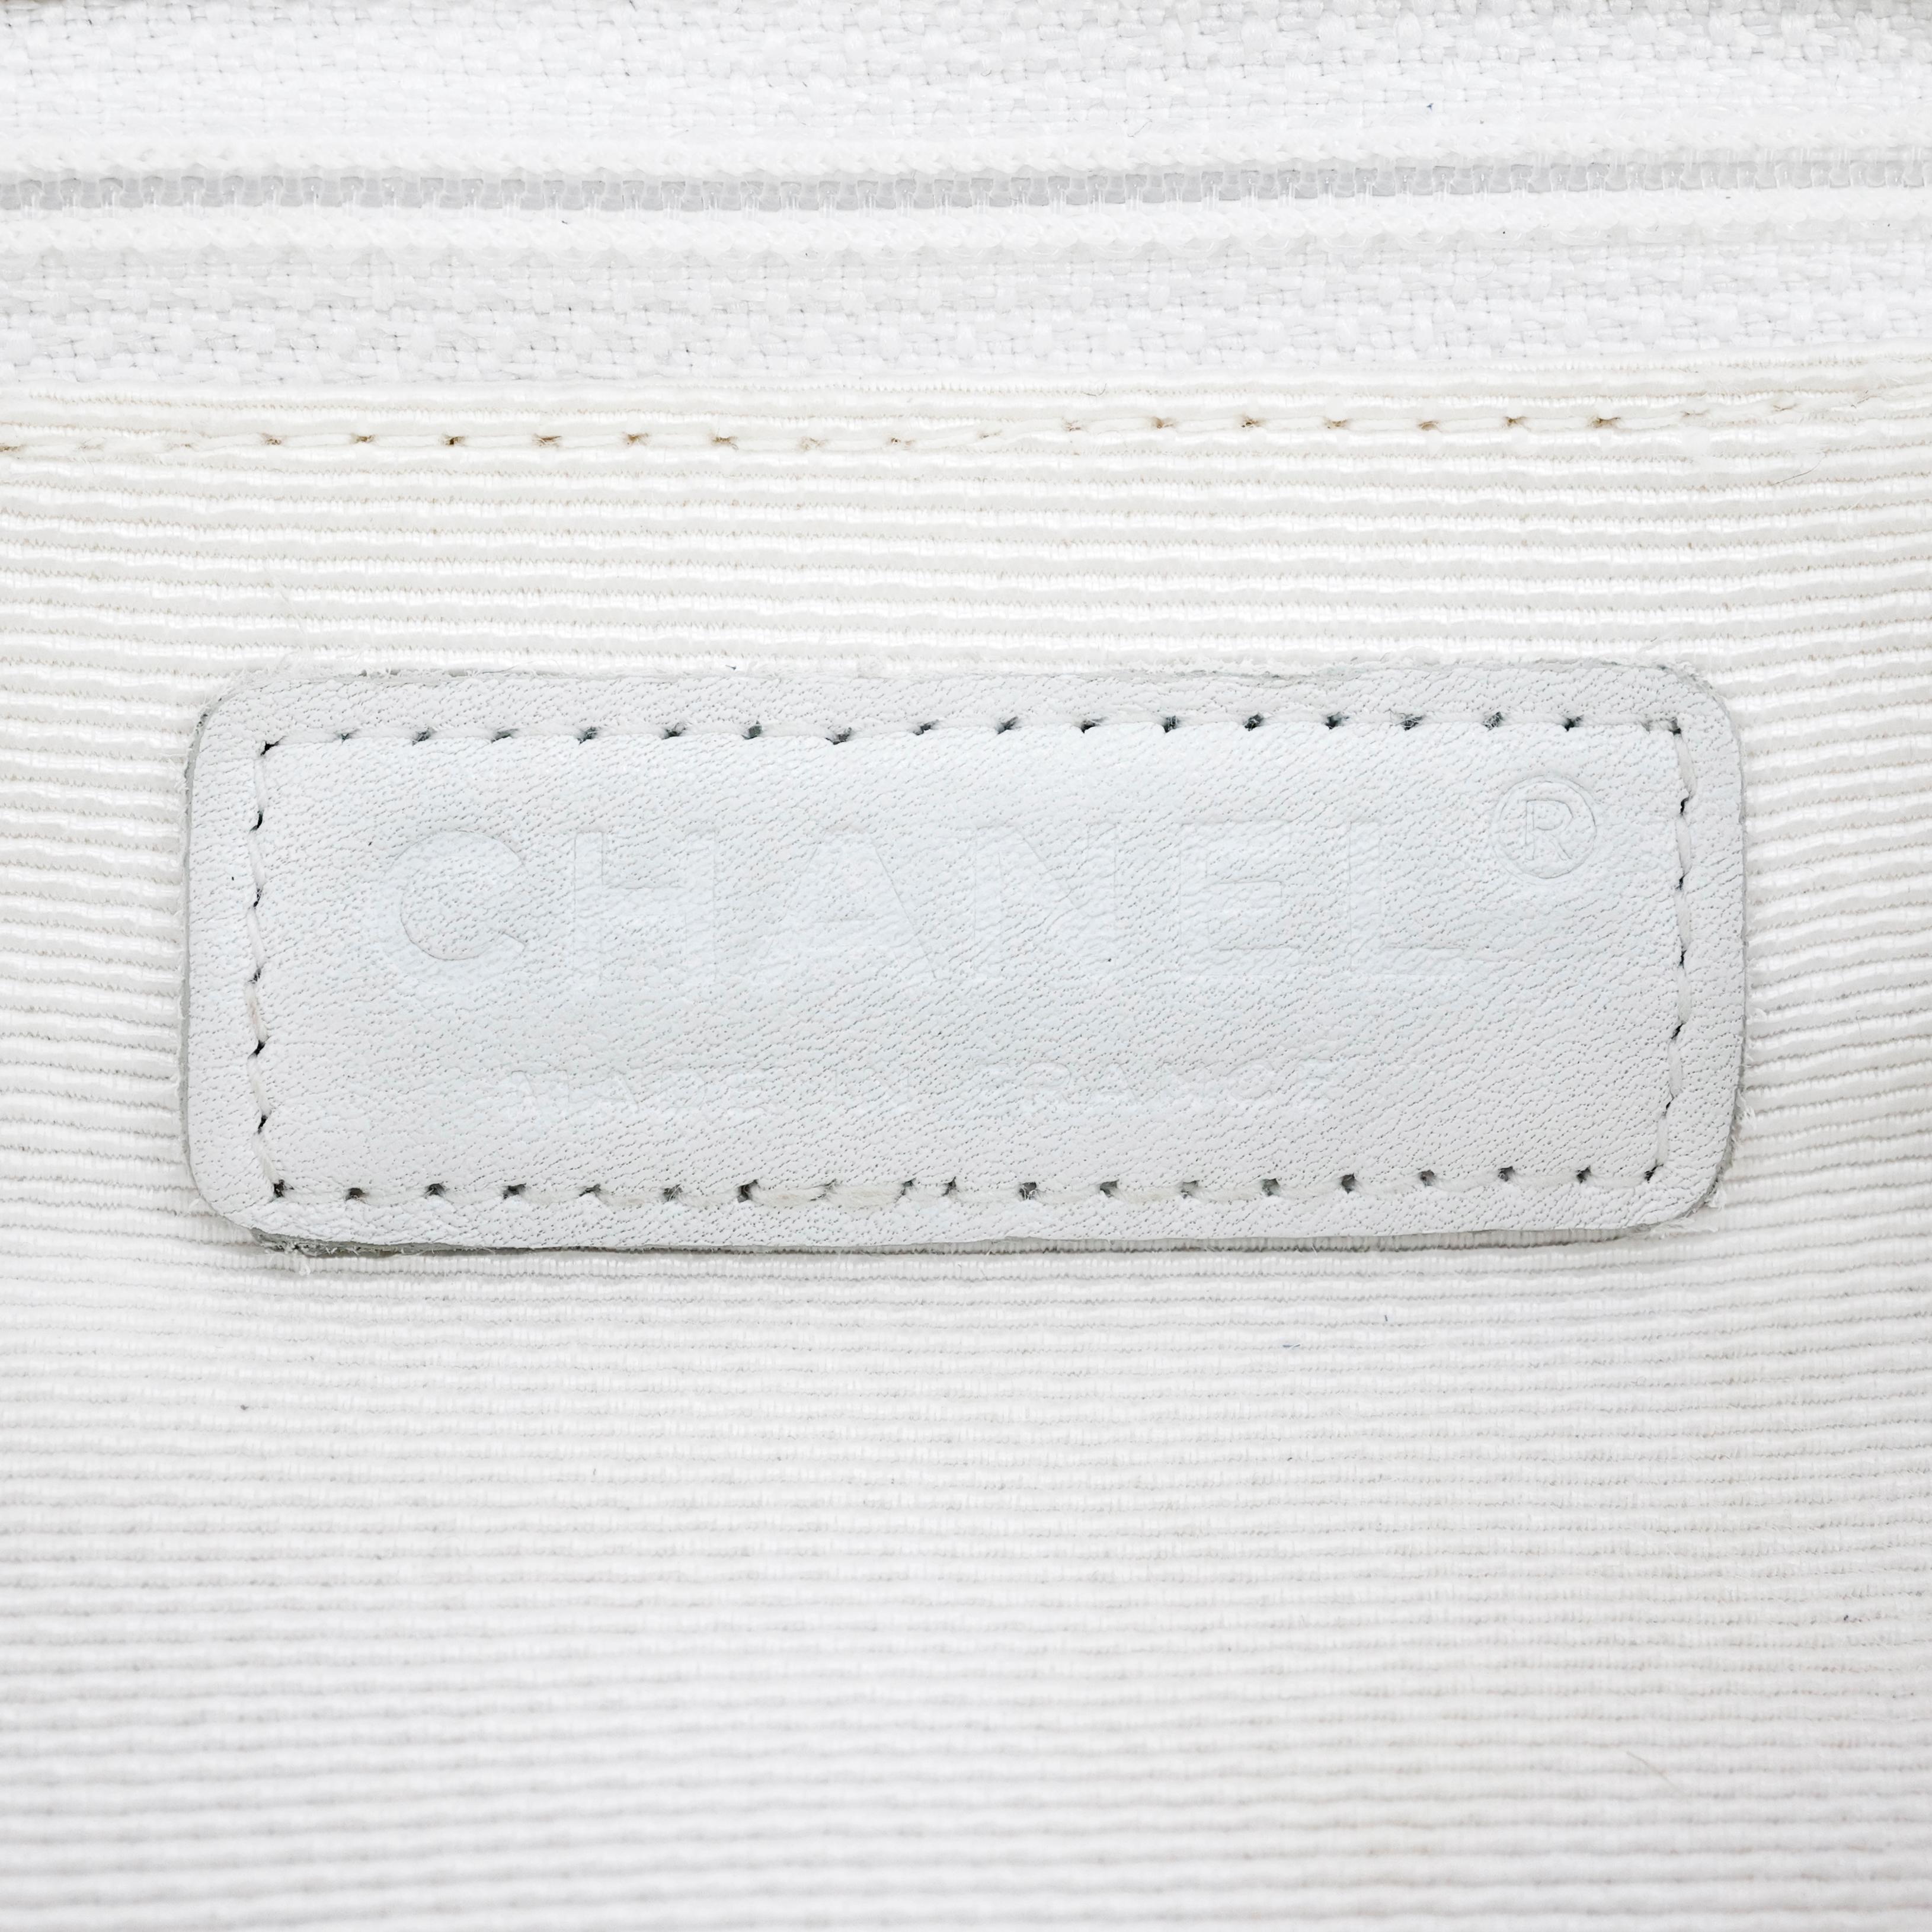 Chanel Flap Bag in Crochet For Sale 3